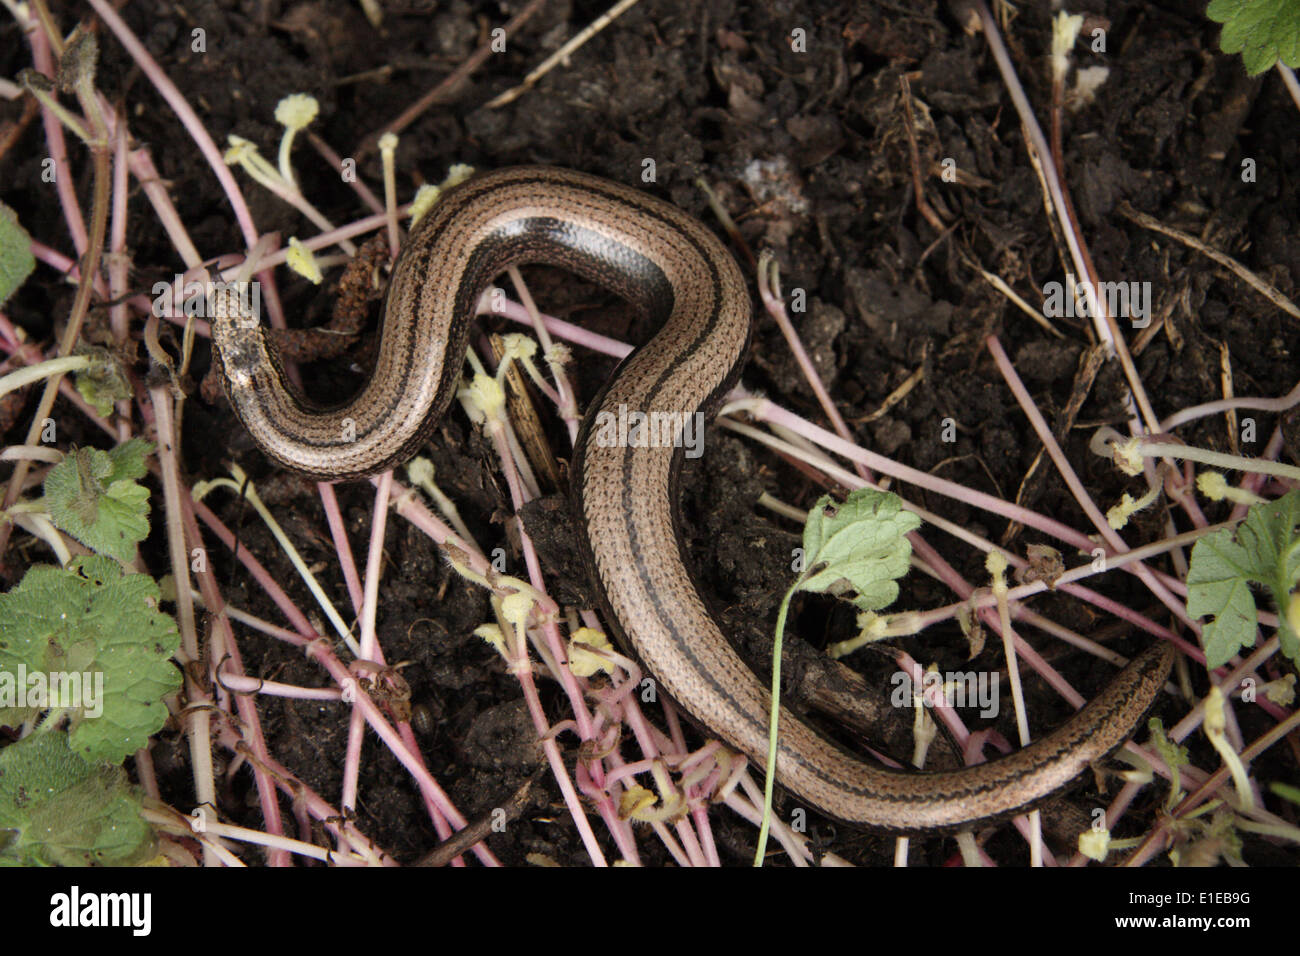 Female Slow-worm Stock Photo